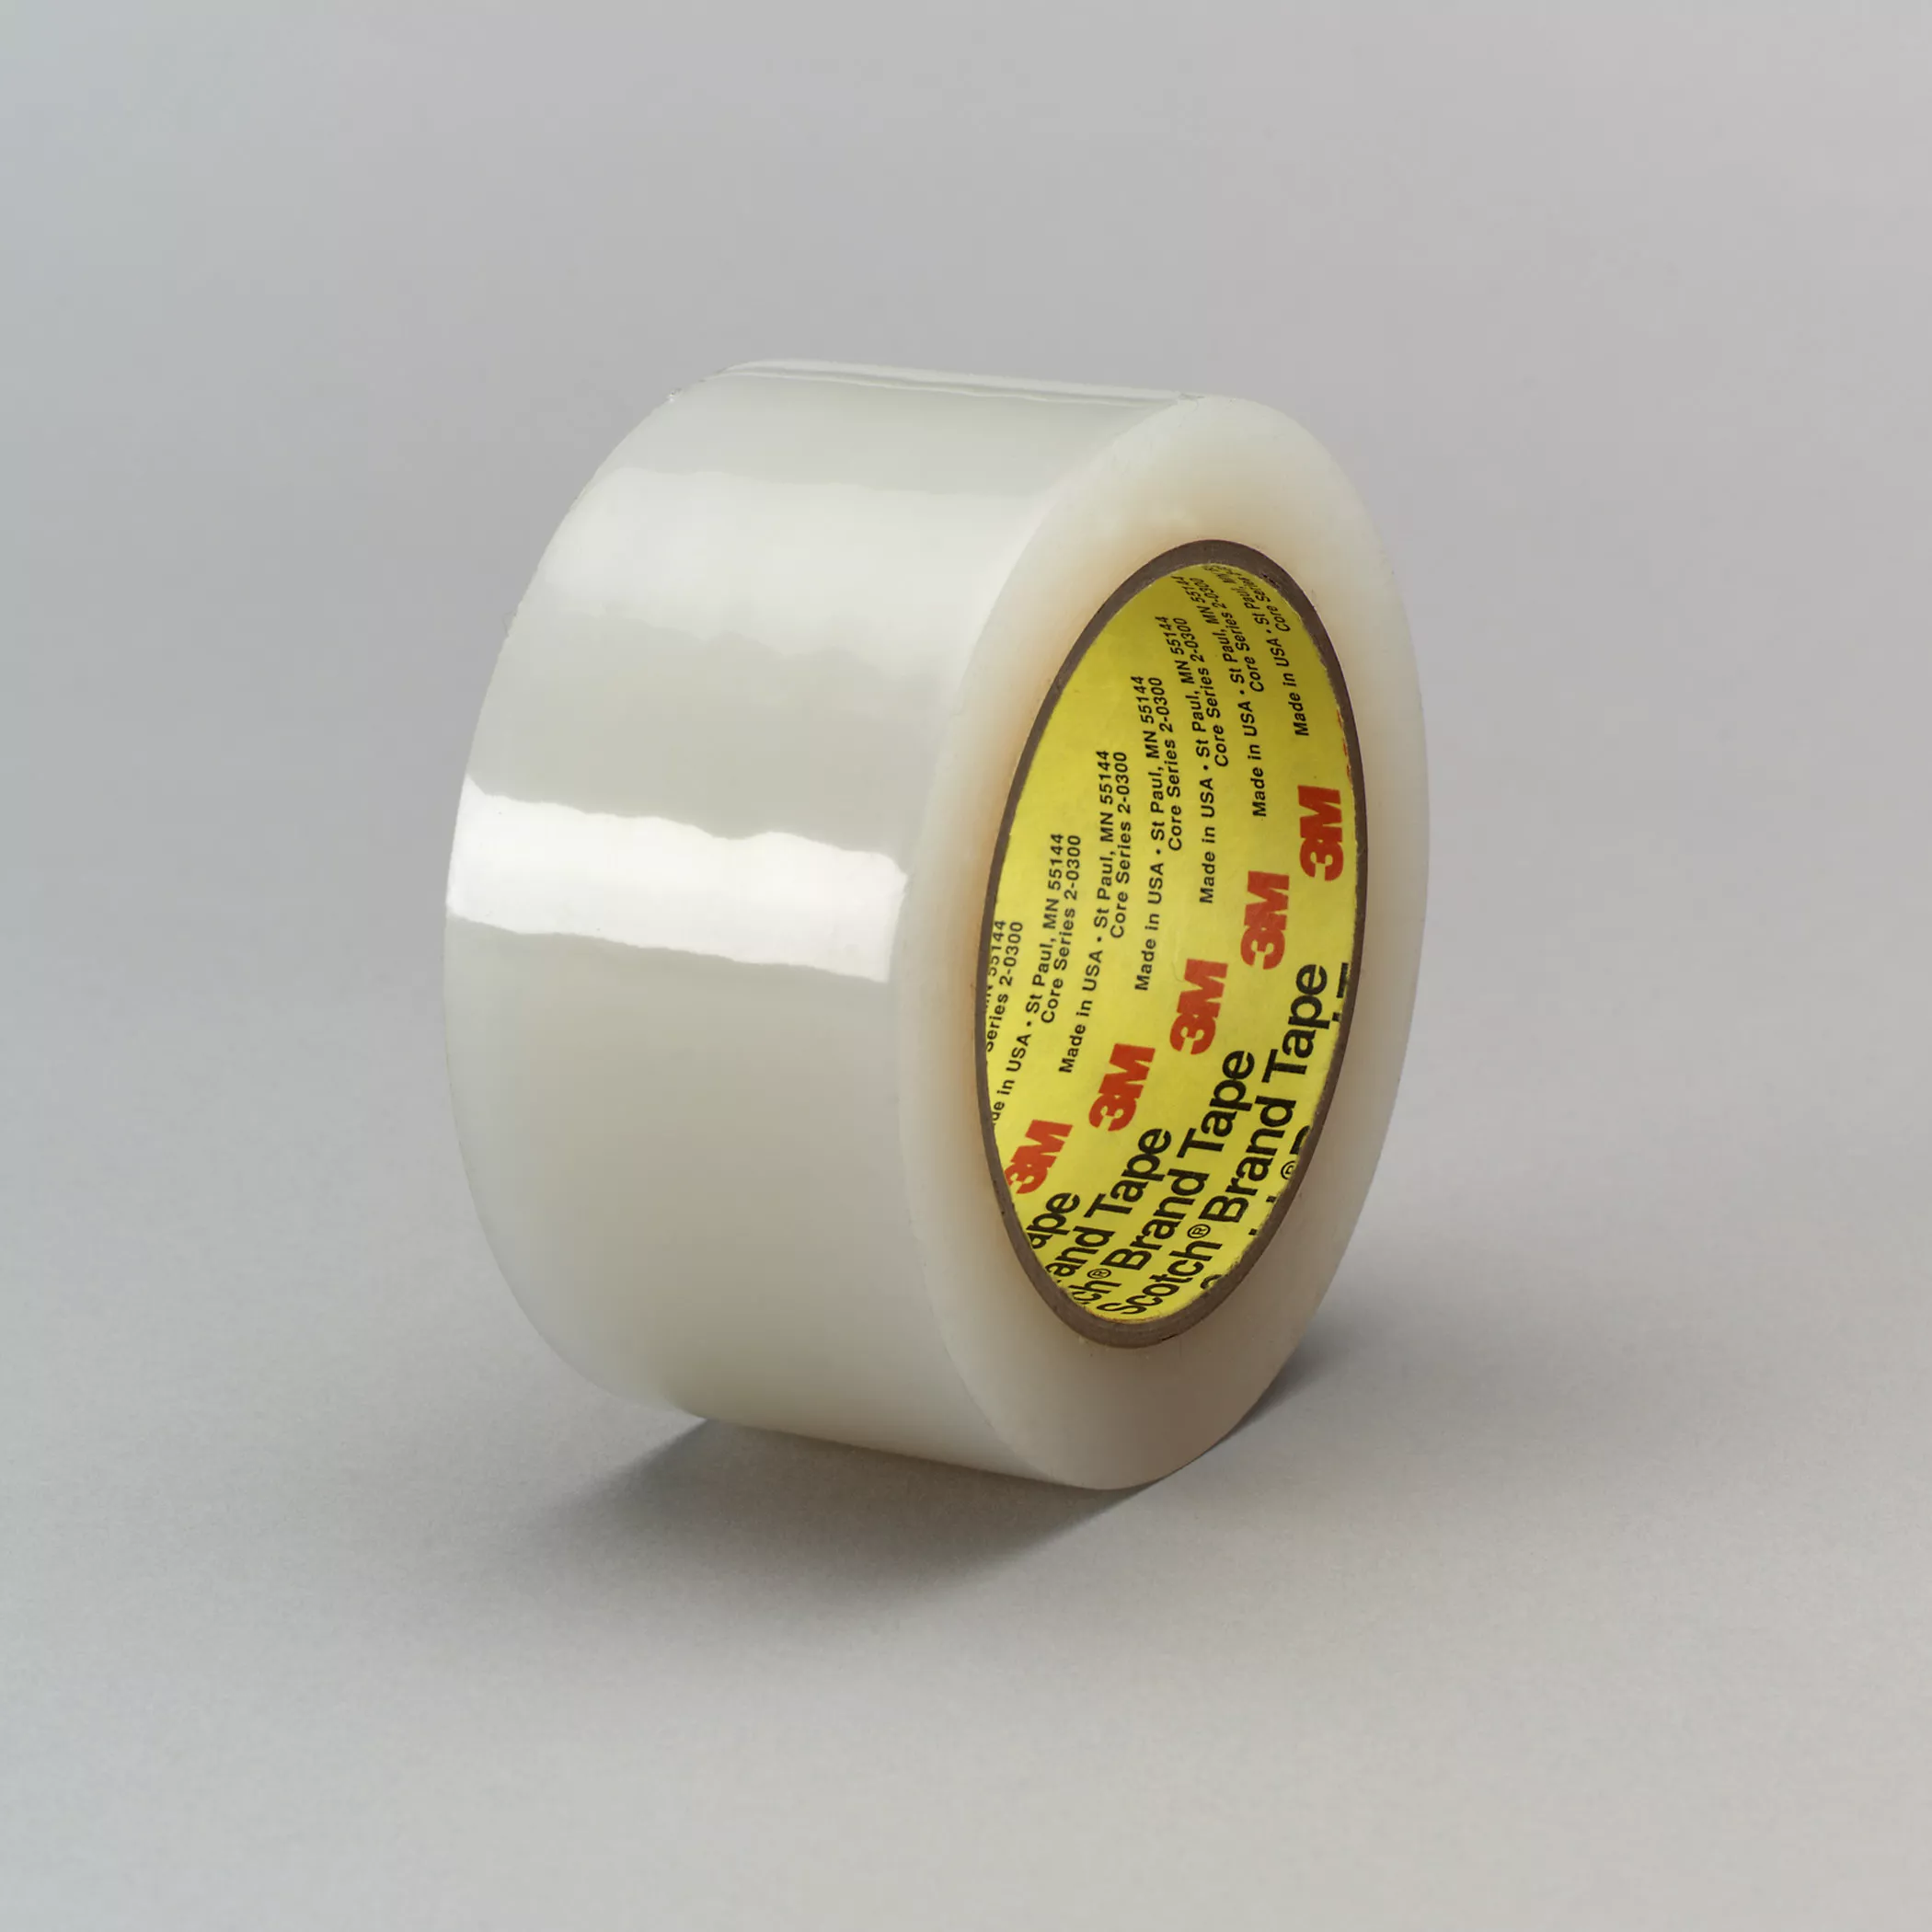 3M™ Polyethylene Tape 483, Transparent, 2 in x 36 yd, 5.0 mil, 24
Roll/Case